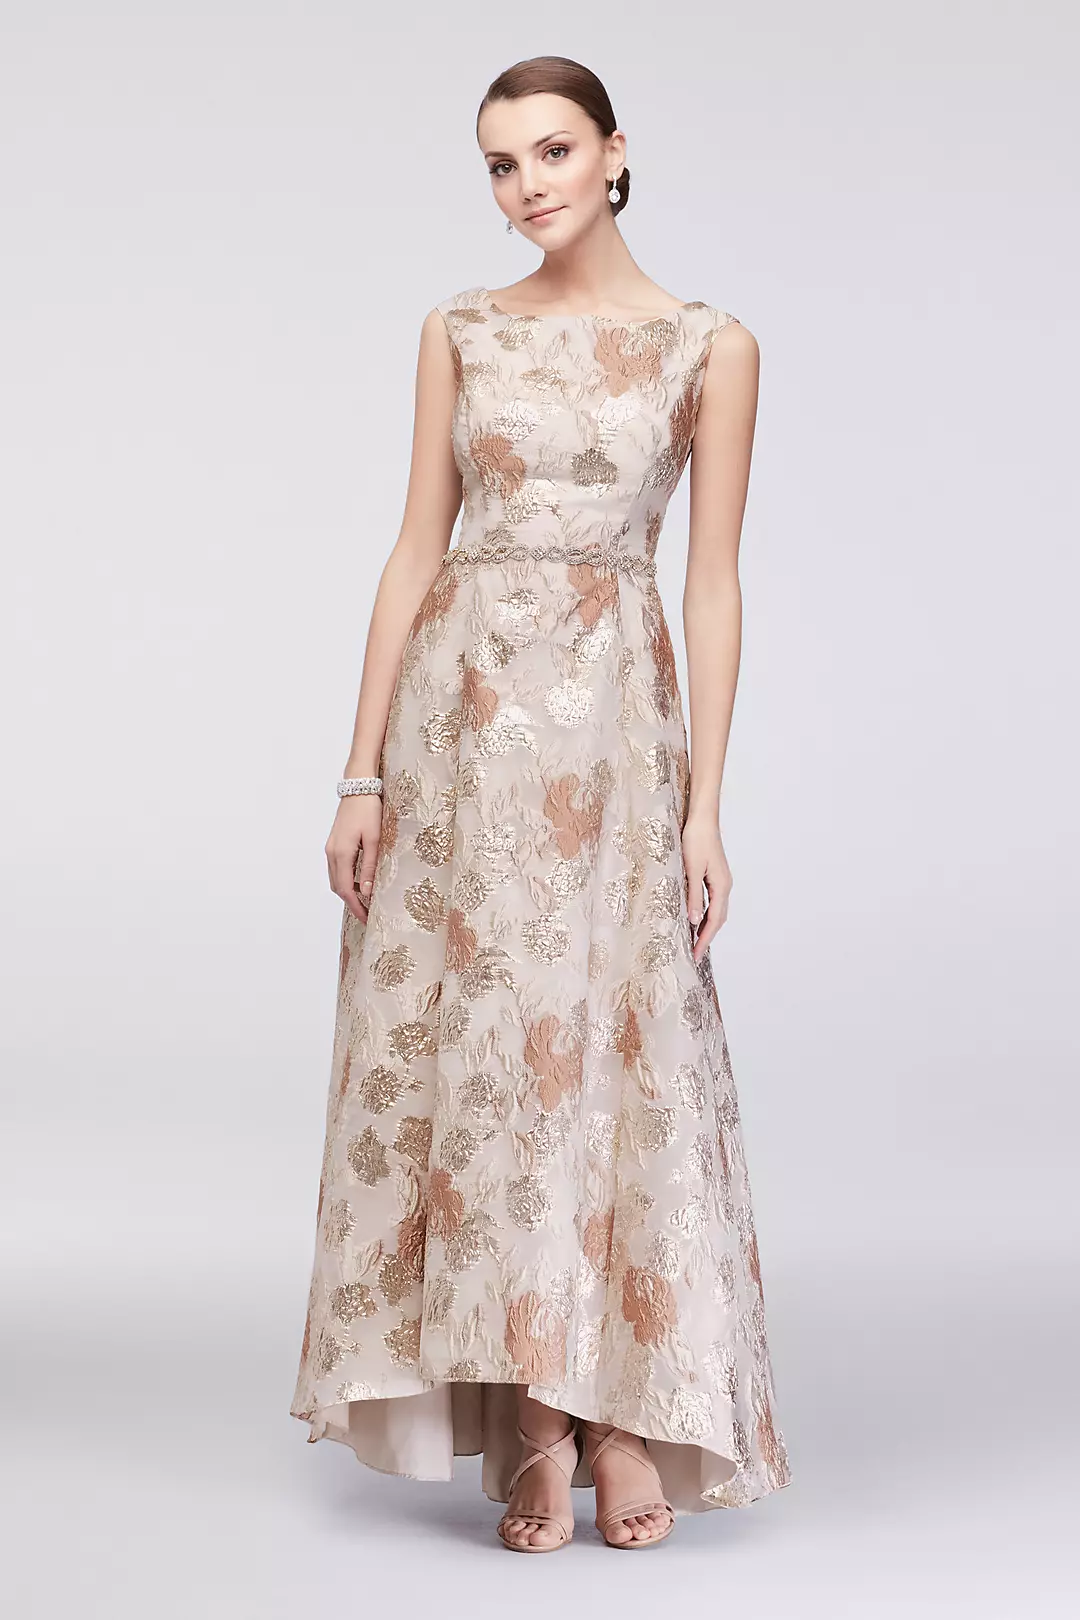 Brocade Tea-Length Dress with Crystal Belt Image